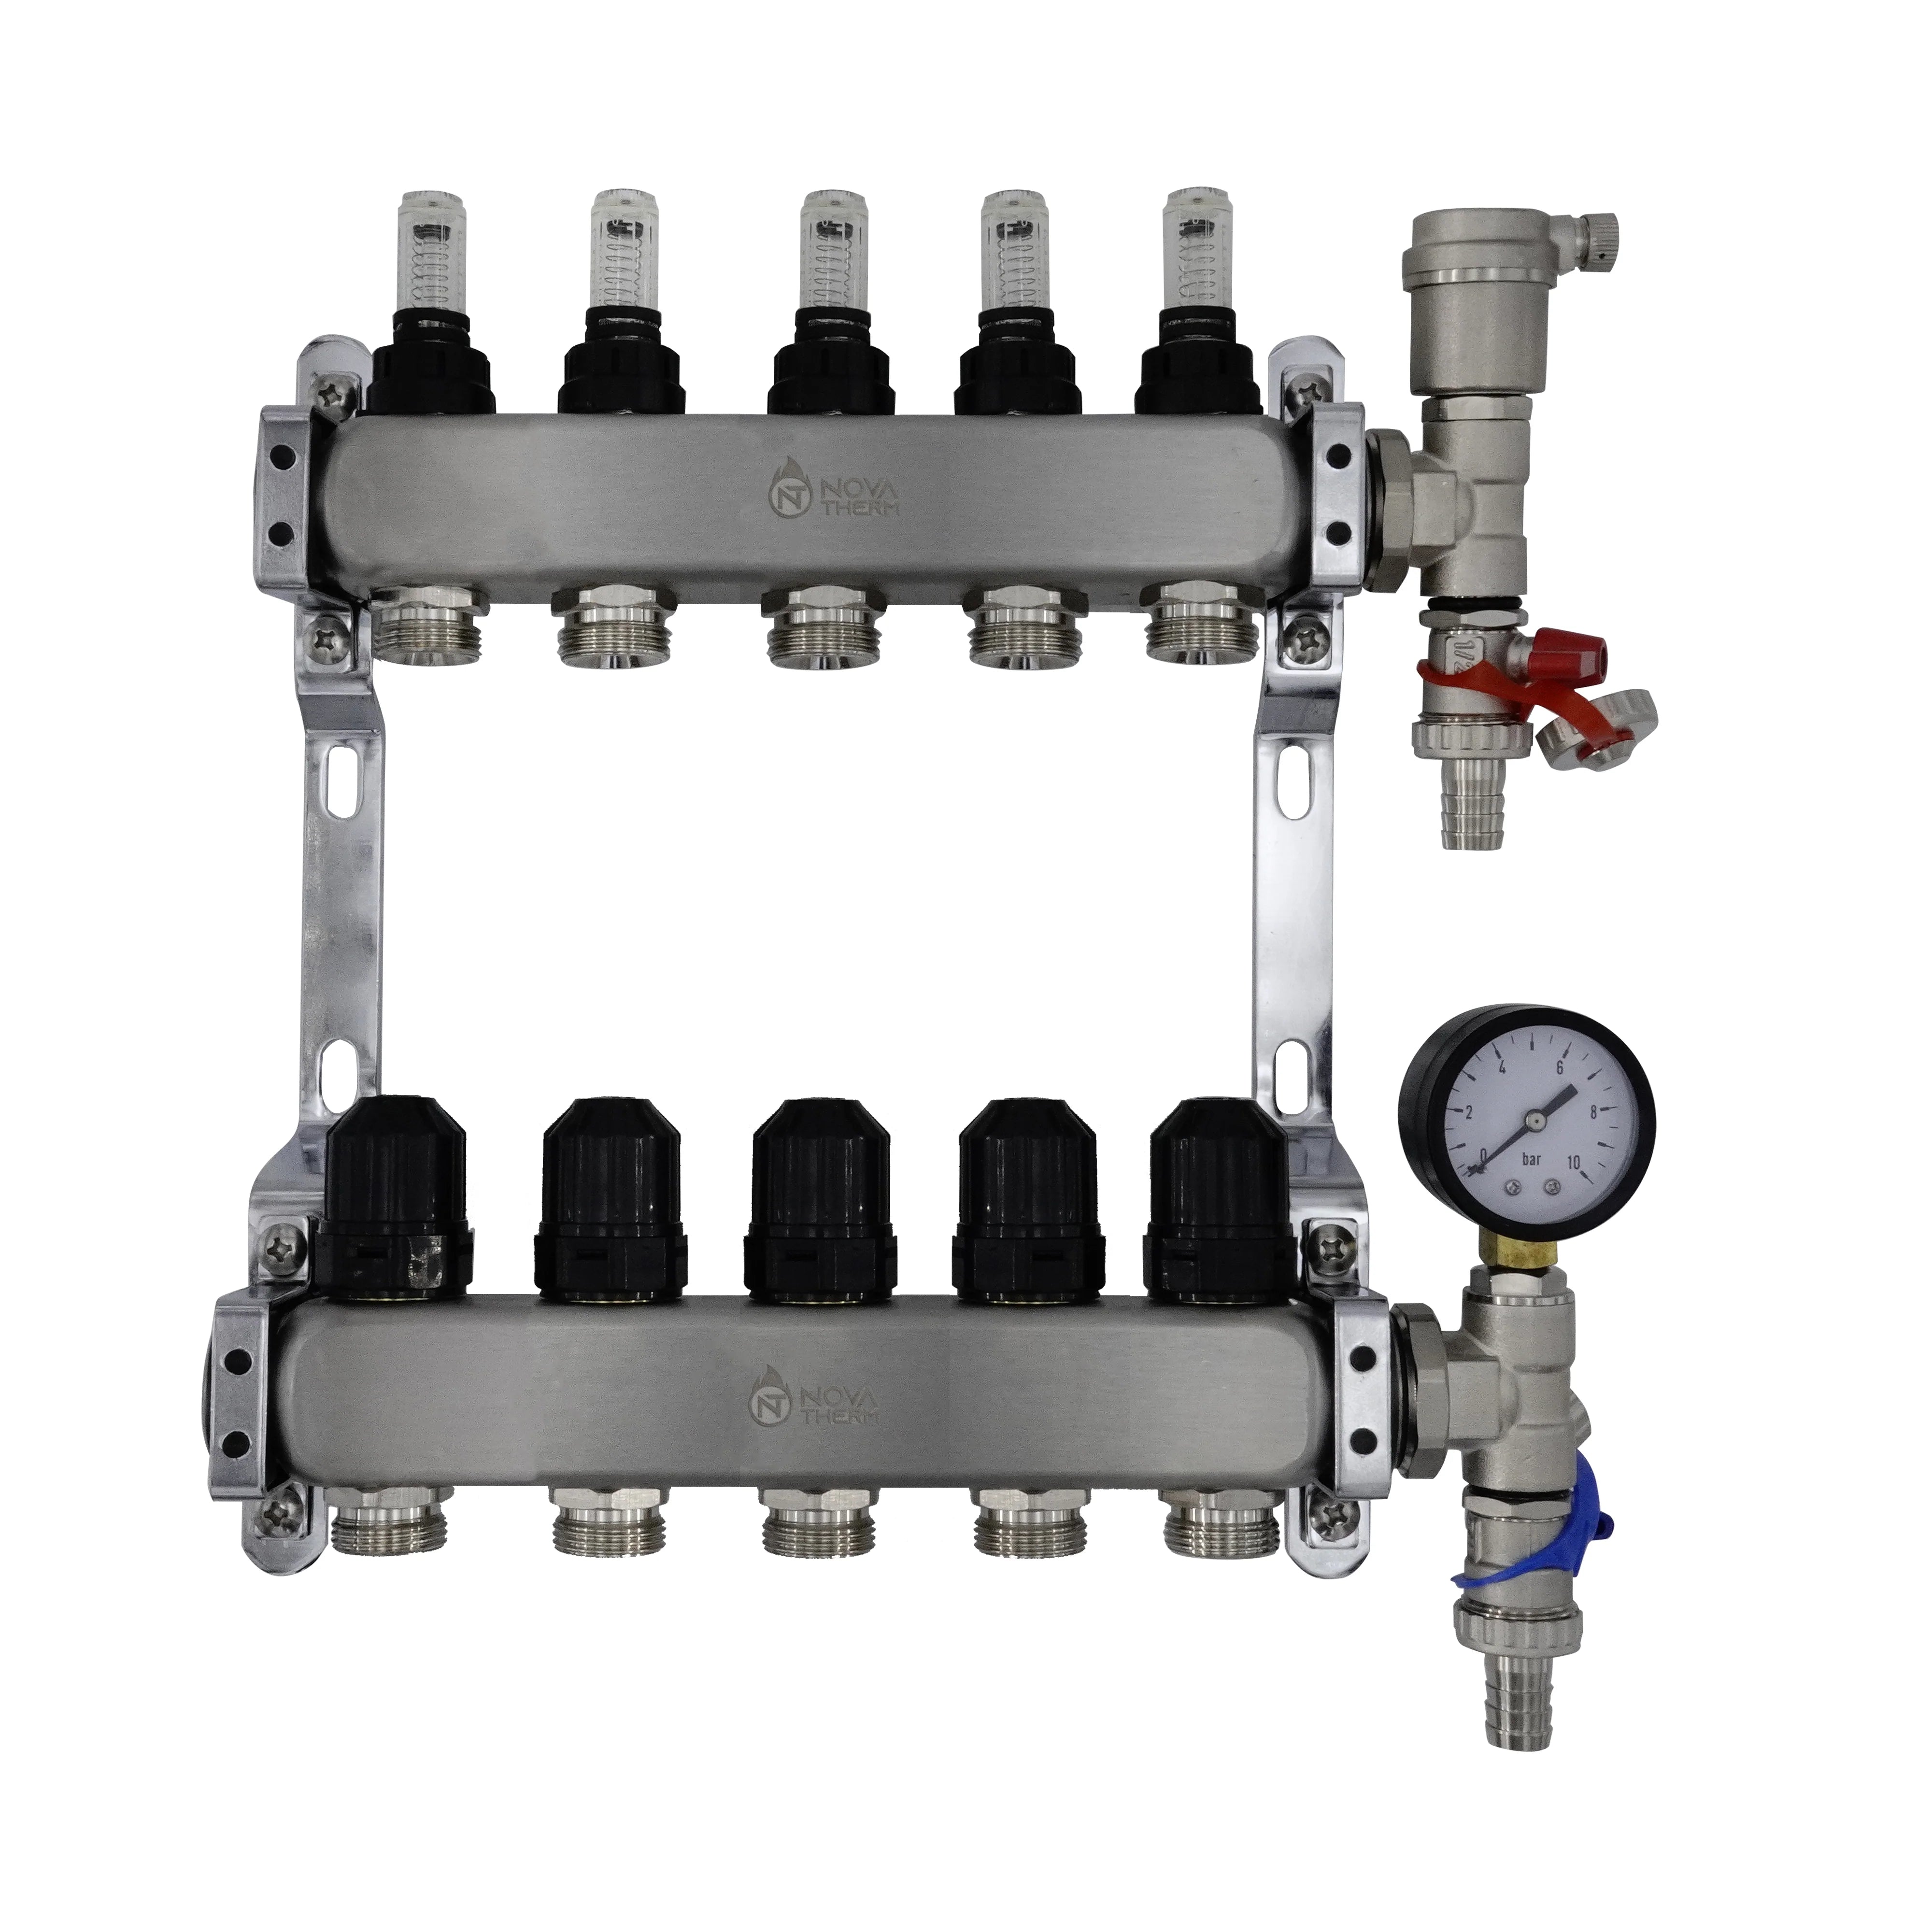 NovaTherm 90sqm Multi-Zone Water Underfloor Heating Kit